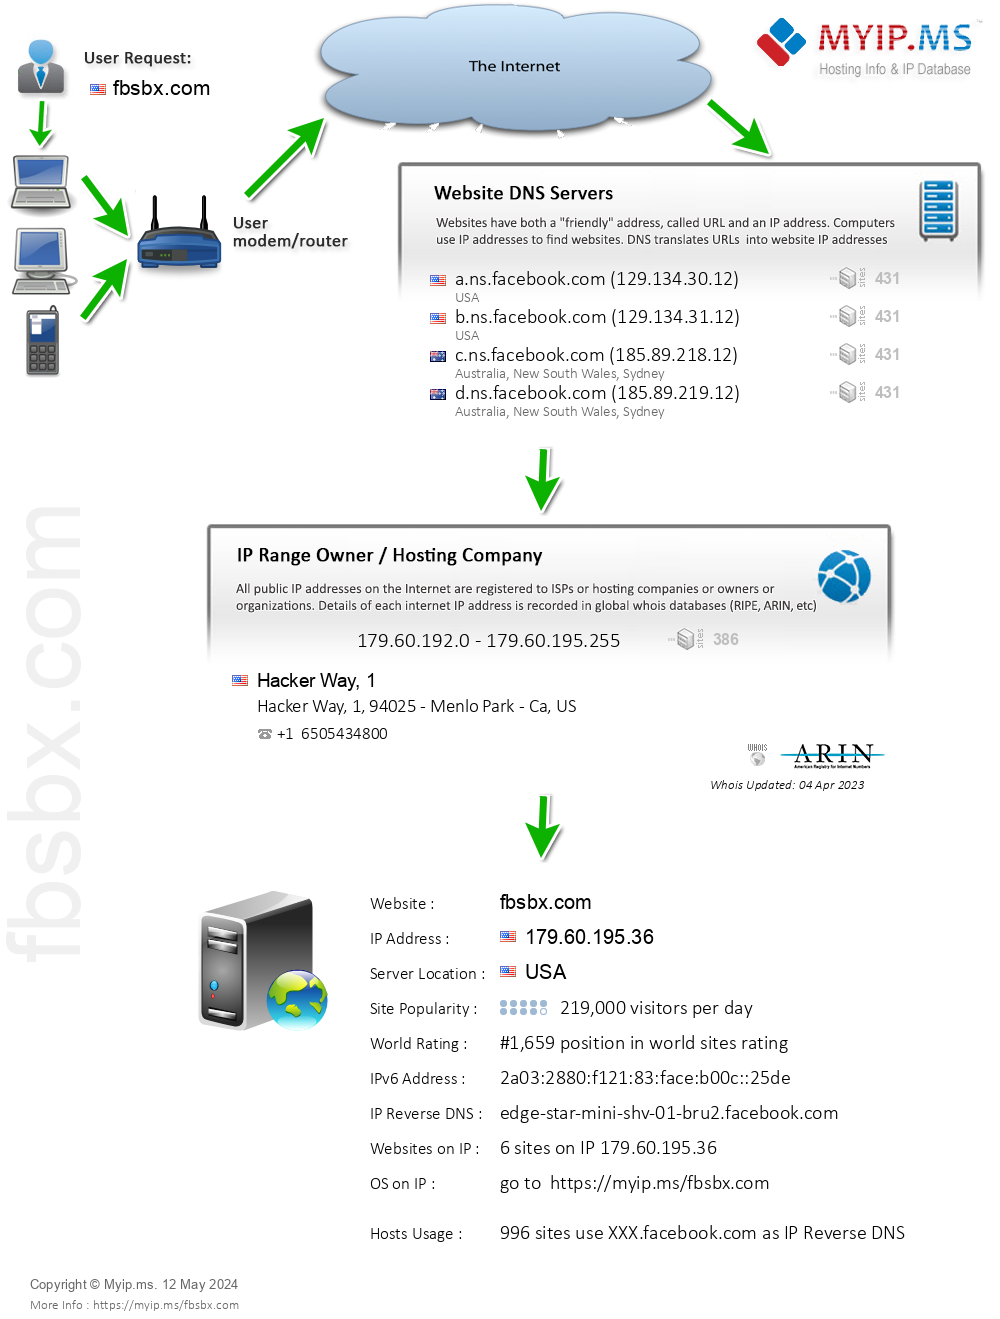 Fbsbx.com - Website Hosting Visual IP Diagram